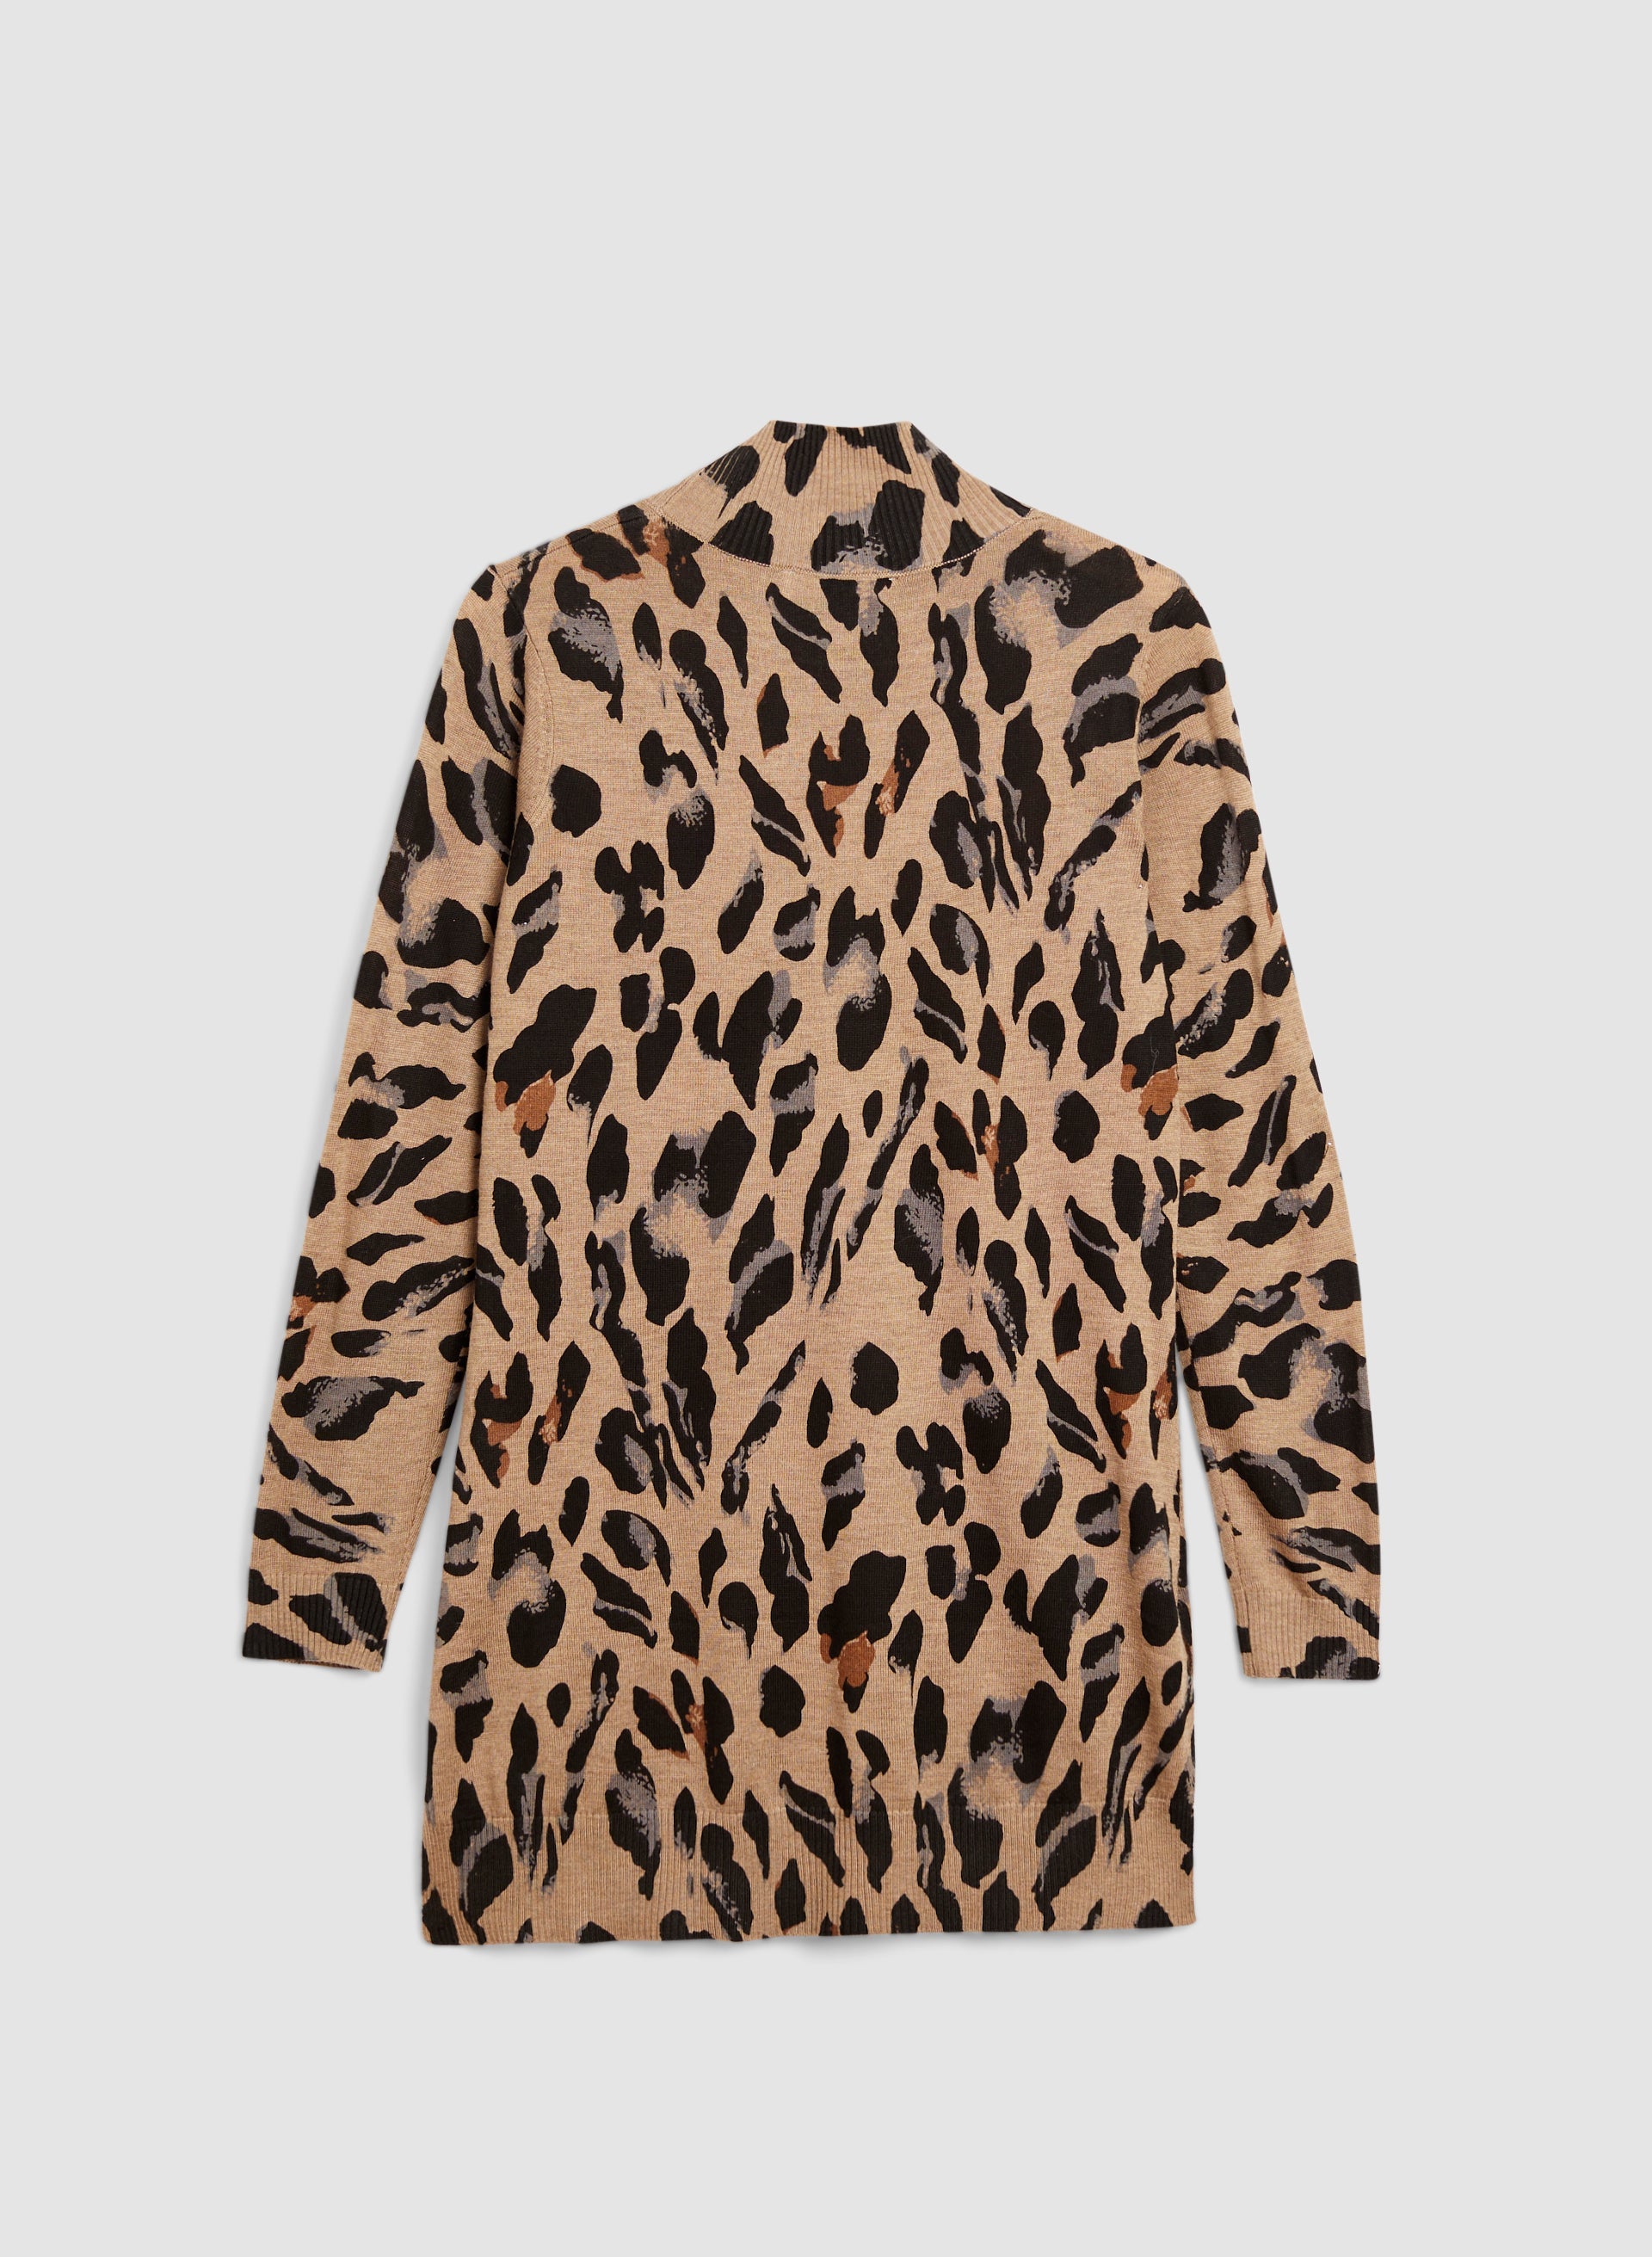 Leopard Print Tunic